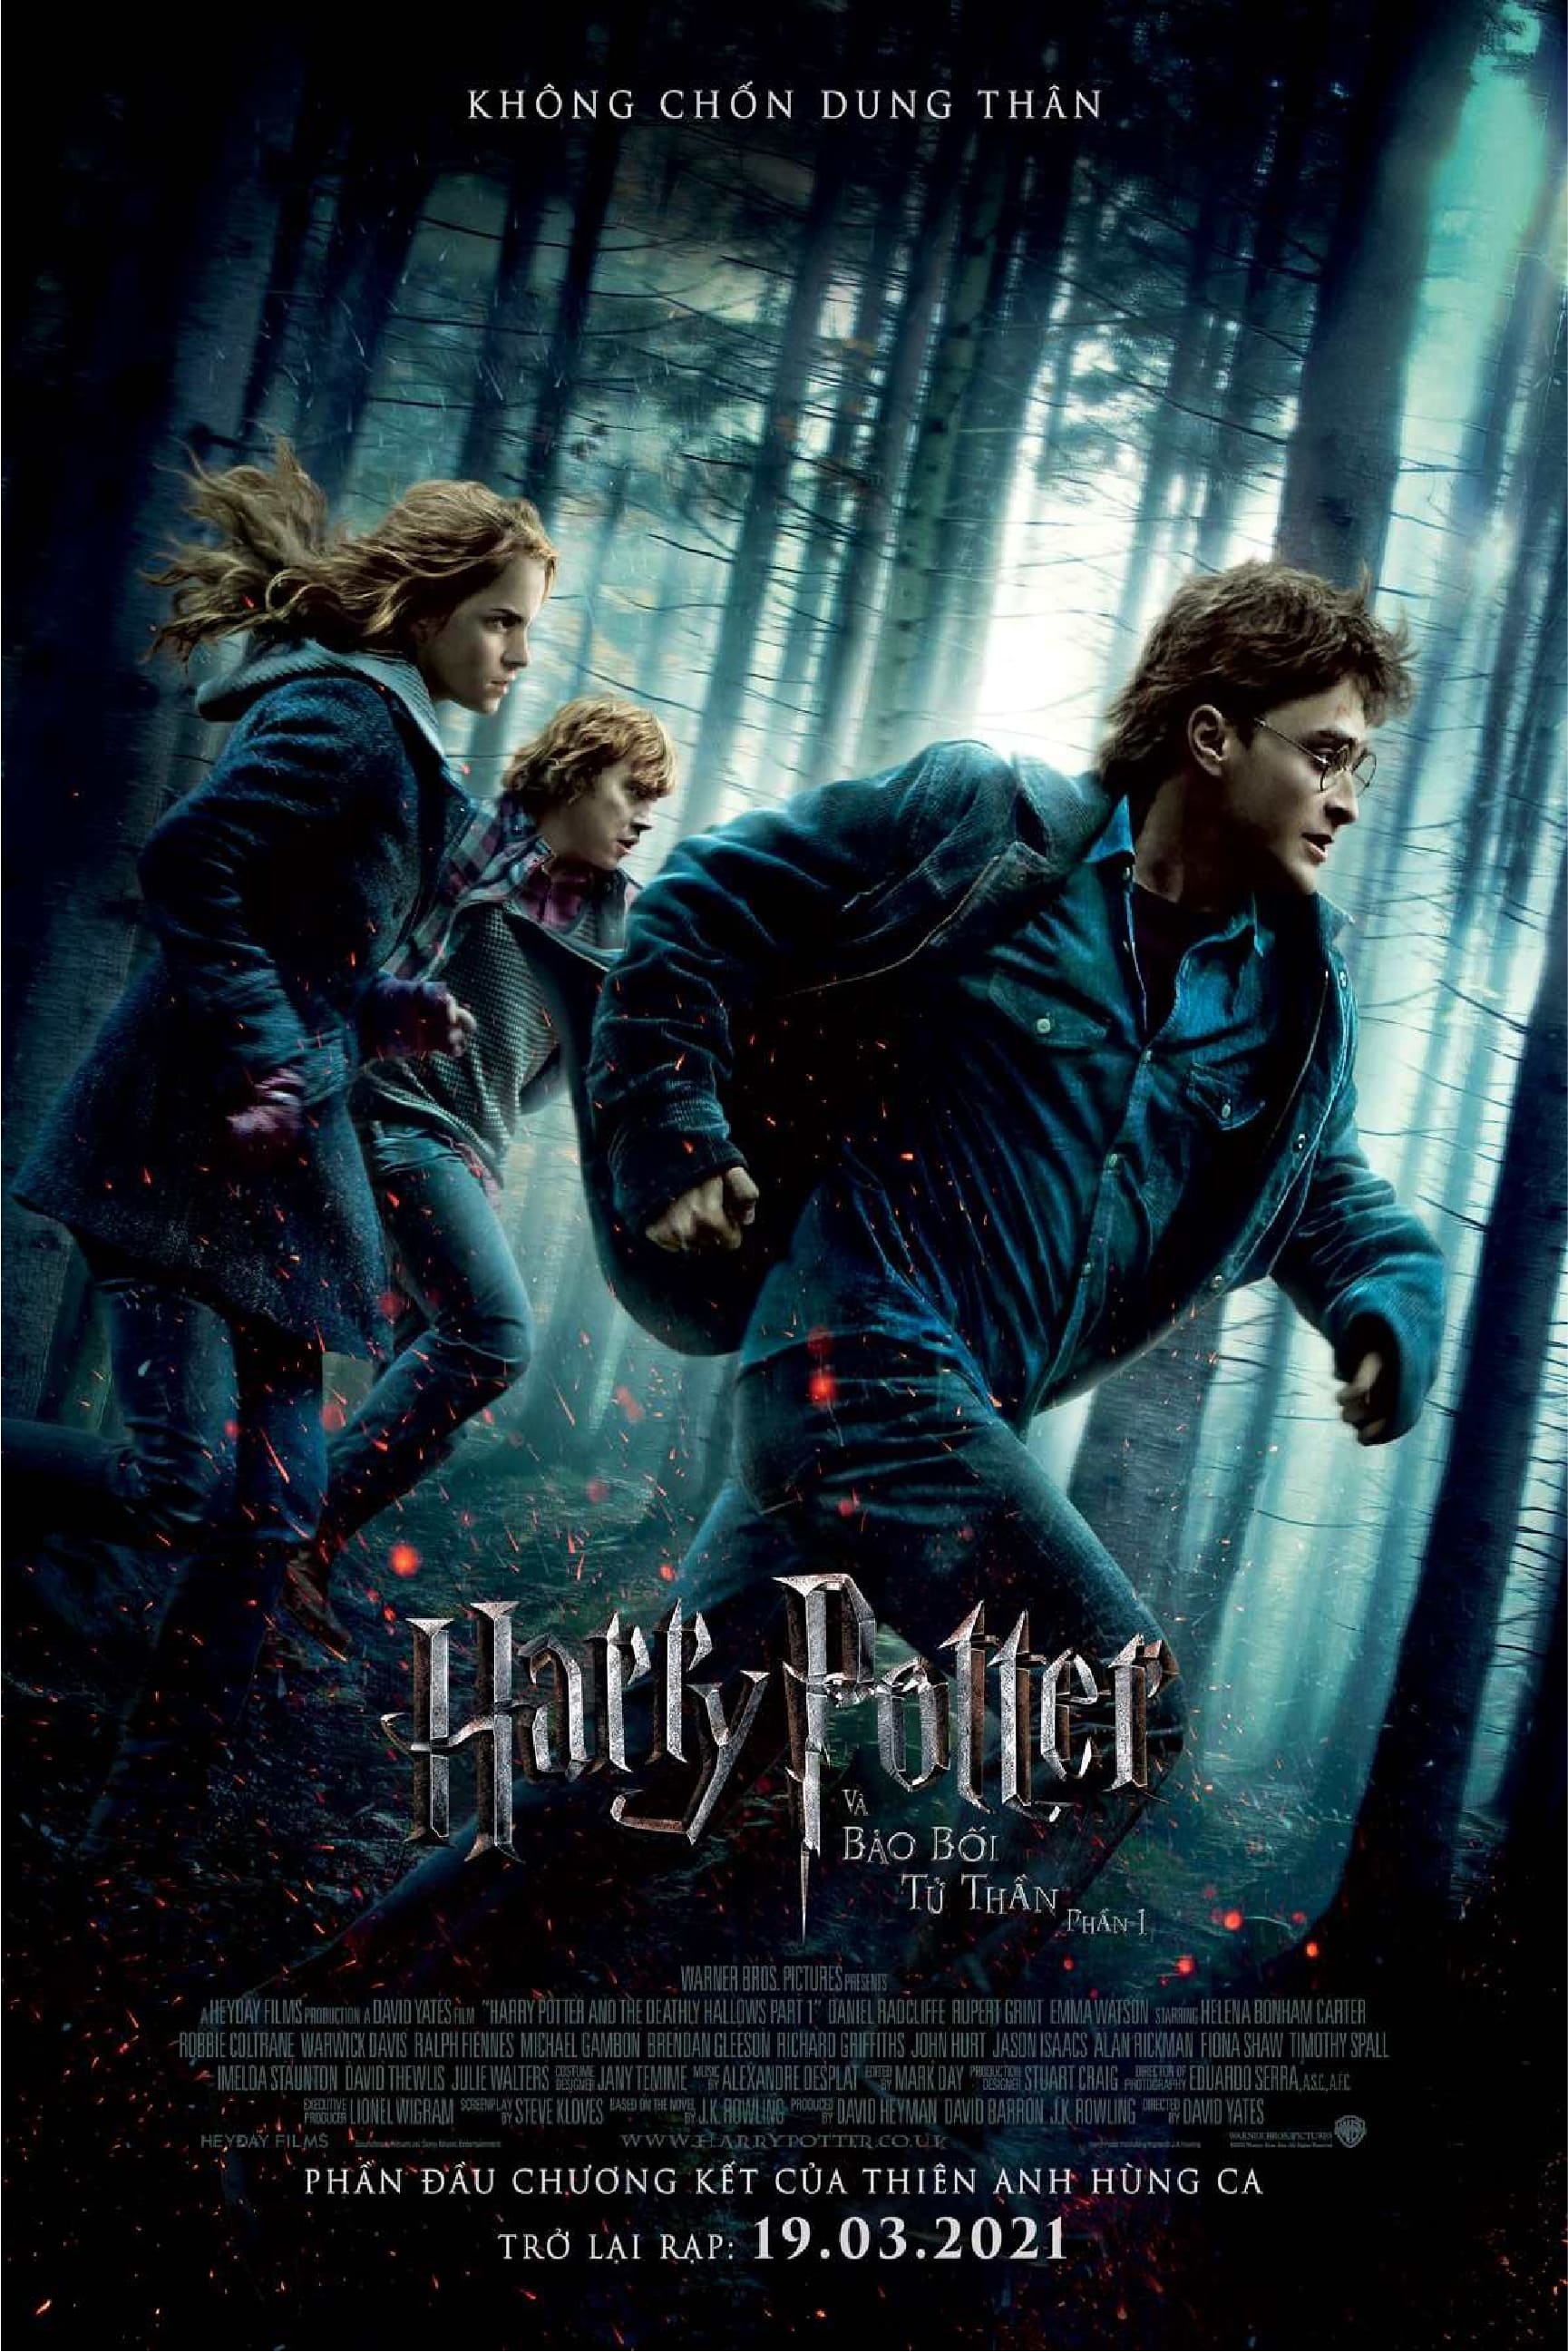 Harry Potter và Bảo Bối Tử Thần: Phần 1 (Harry Potter and the Deathly Hallows: Part 1) [2010]